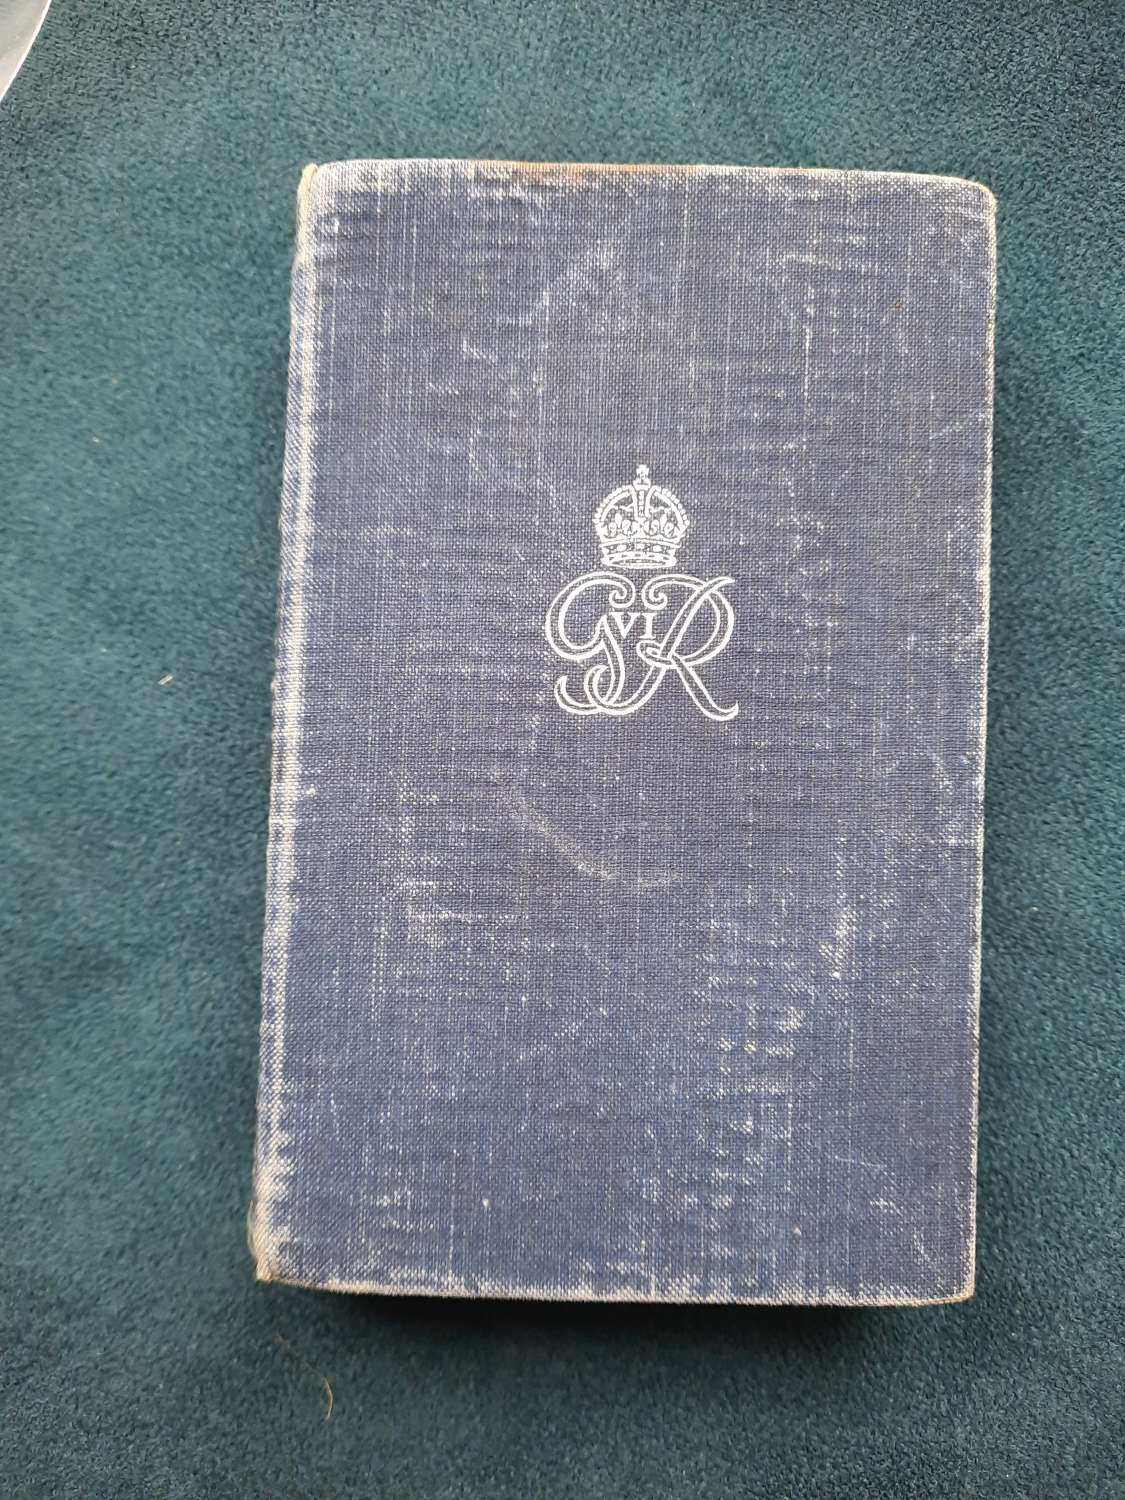 1937 GVIR Bible inscribed to 'Sapper Ball'